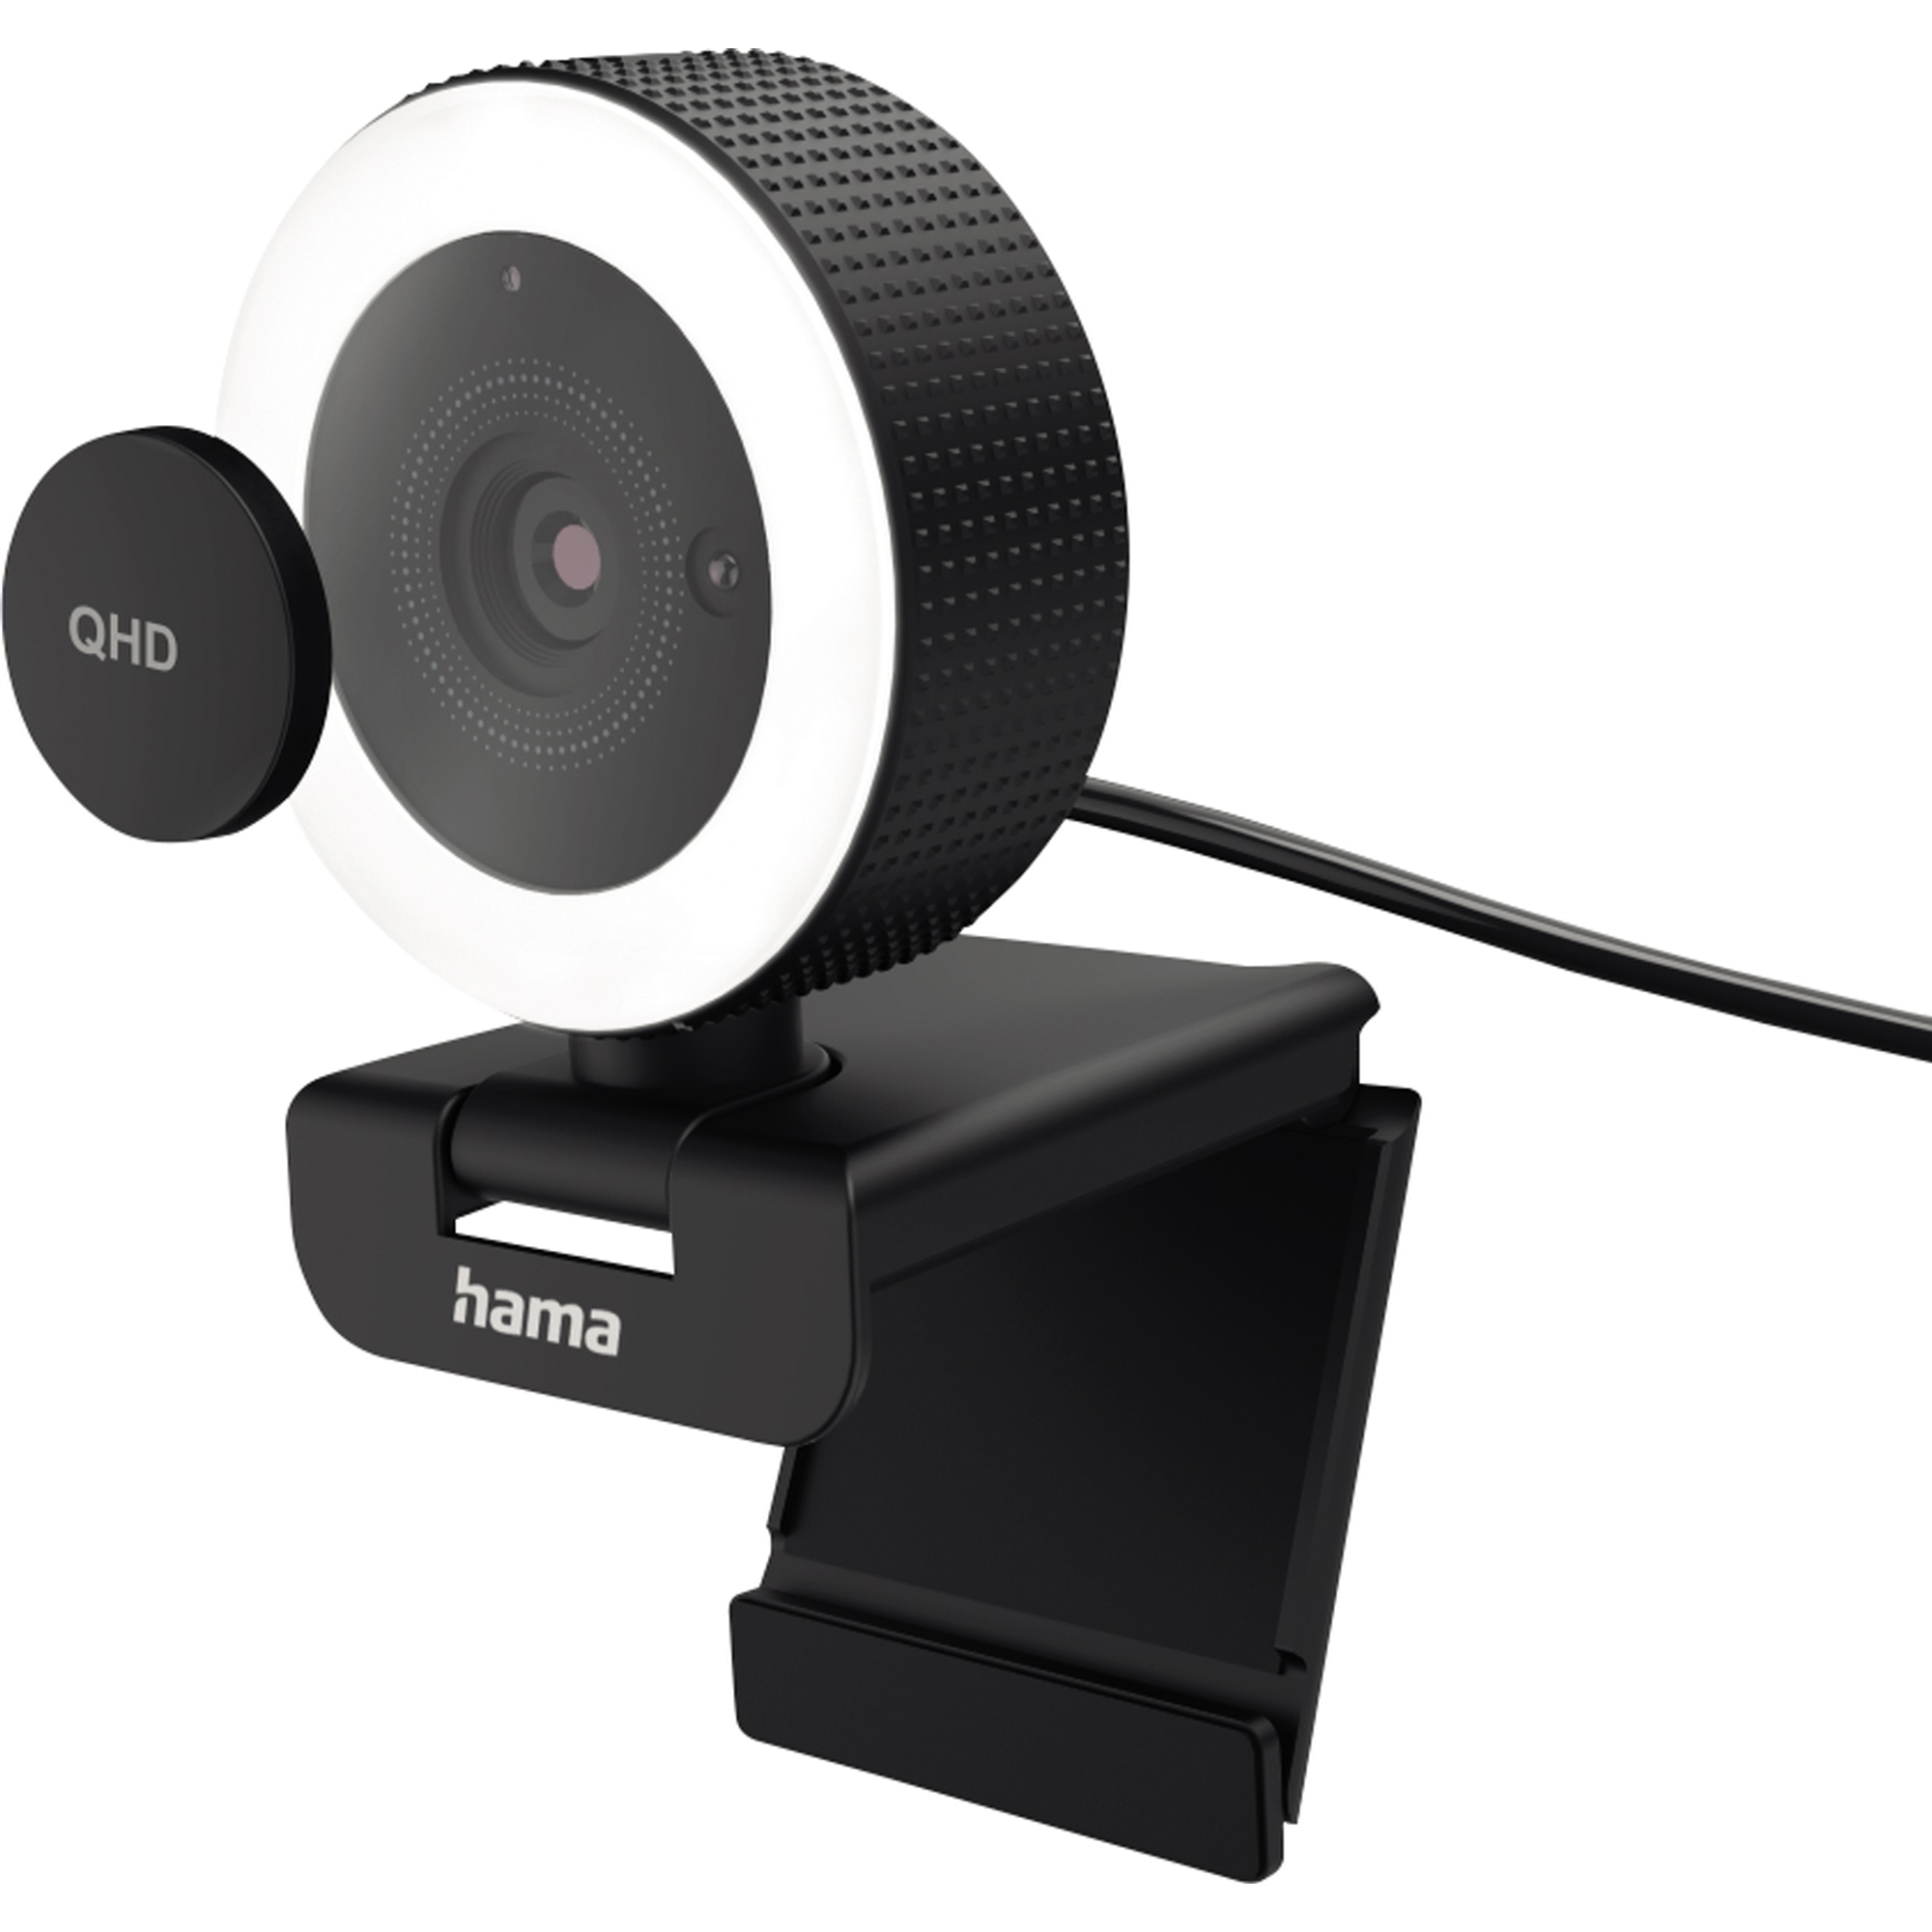 HAMA Webcam C-800 Pro QHD USB 2.0 2560 x 1440 schwarz Ringlicht